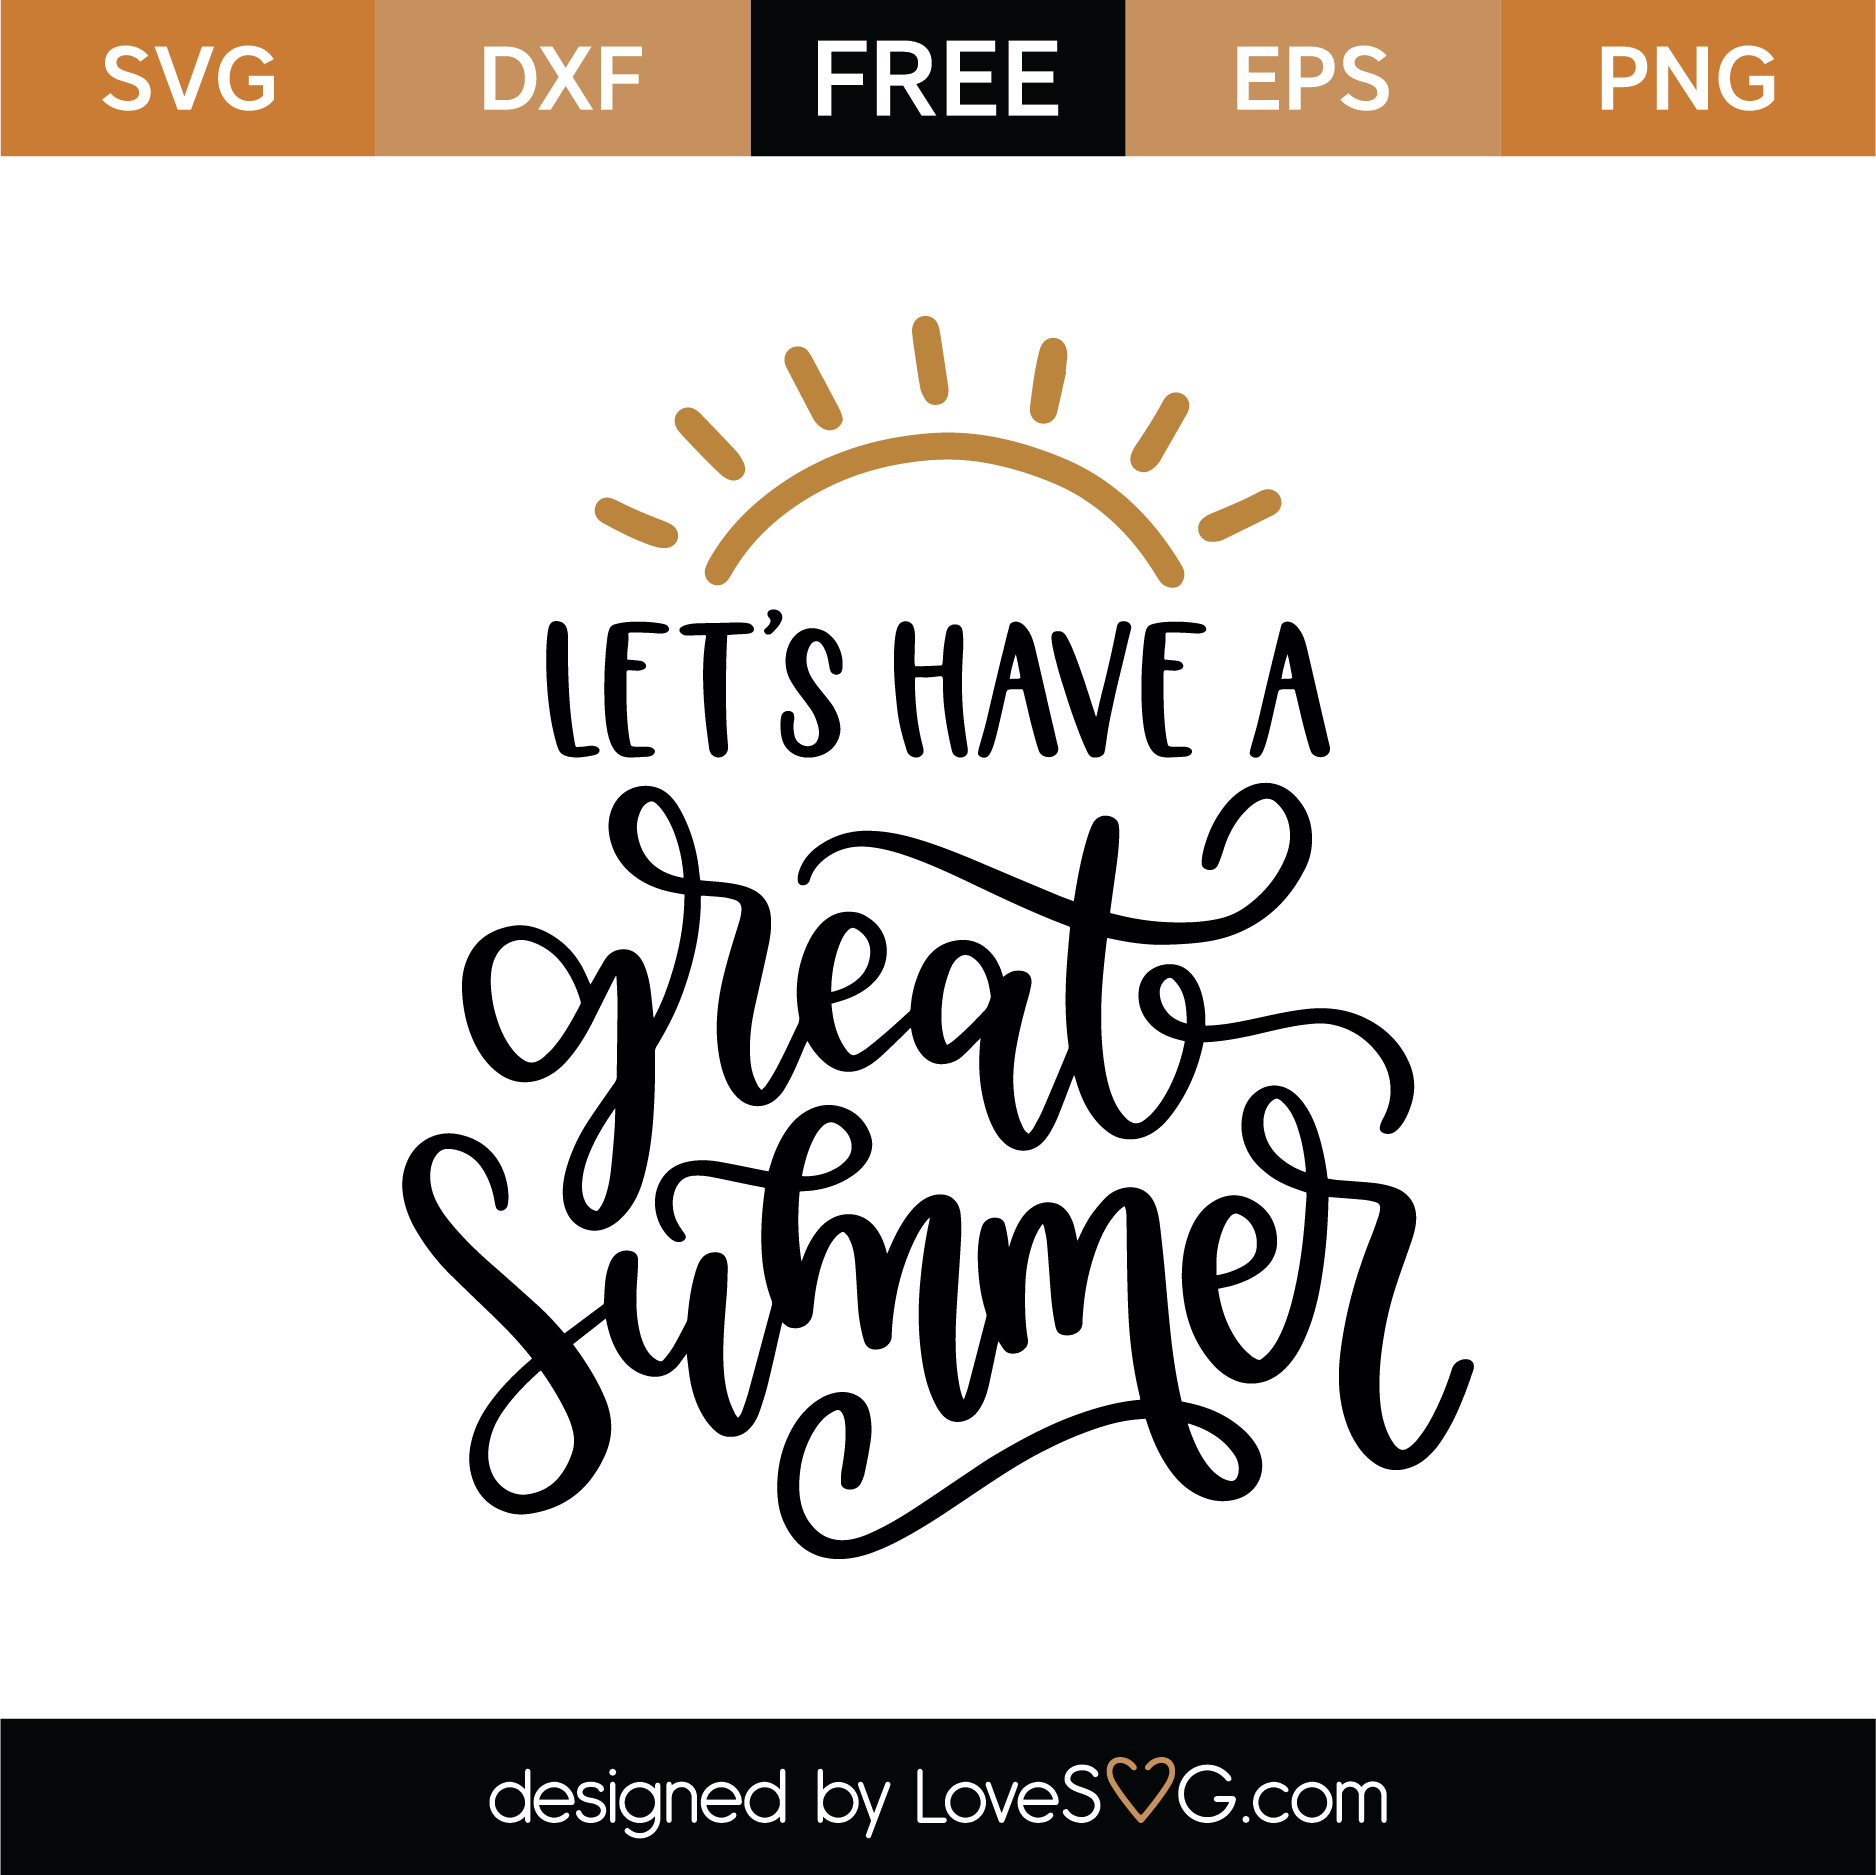 Download Free Let's Have A Great Summer SVG Cut File | Lovesvg.com